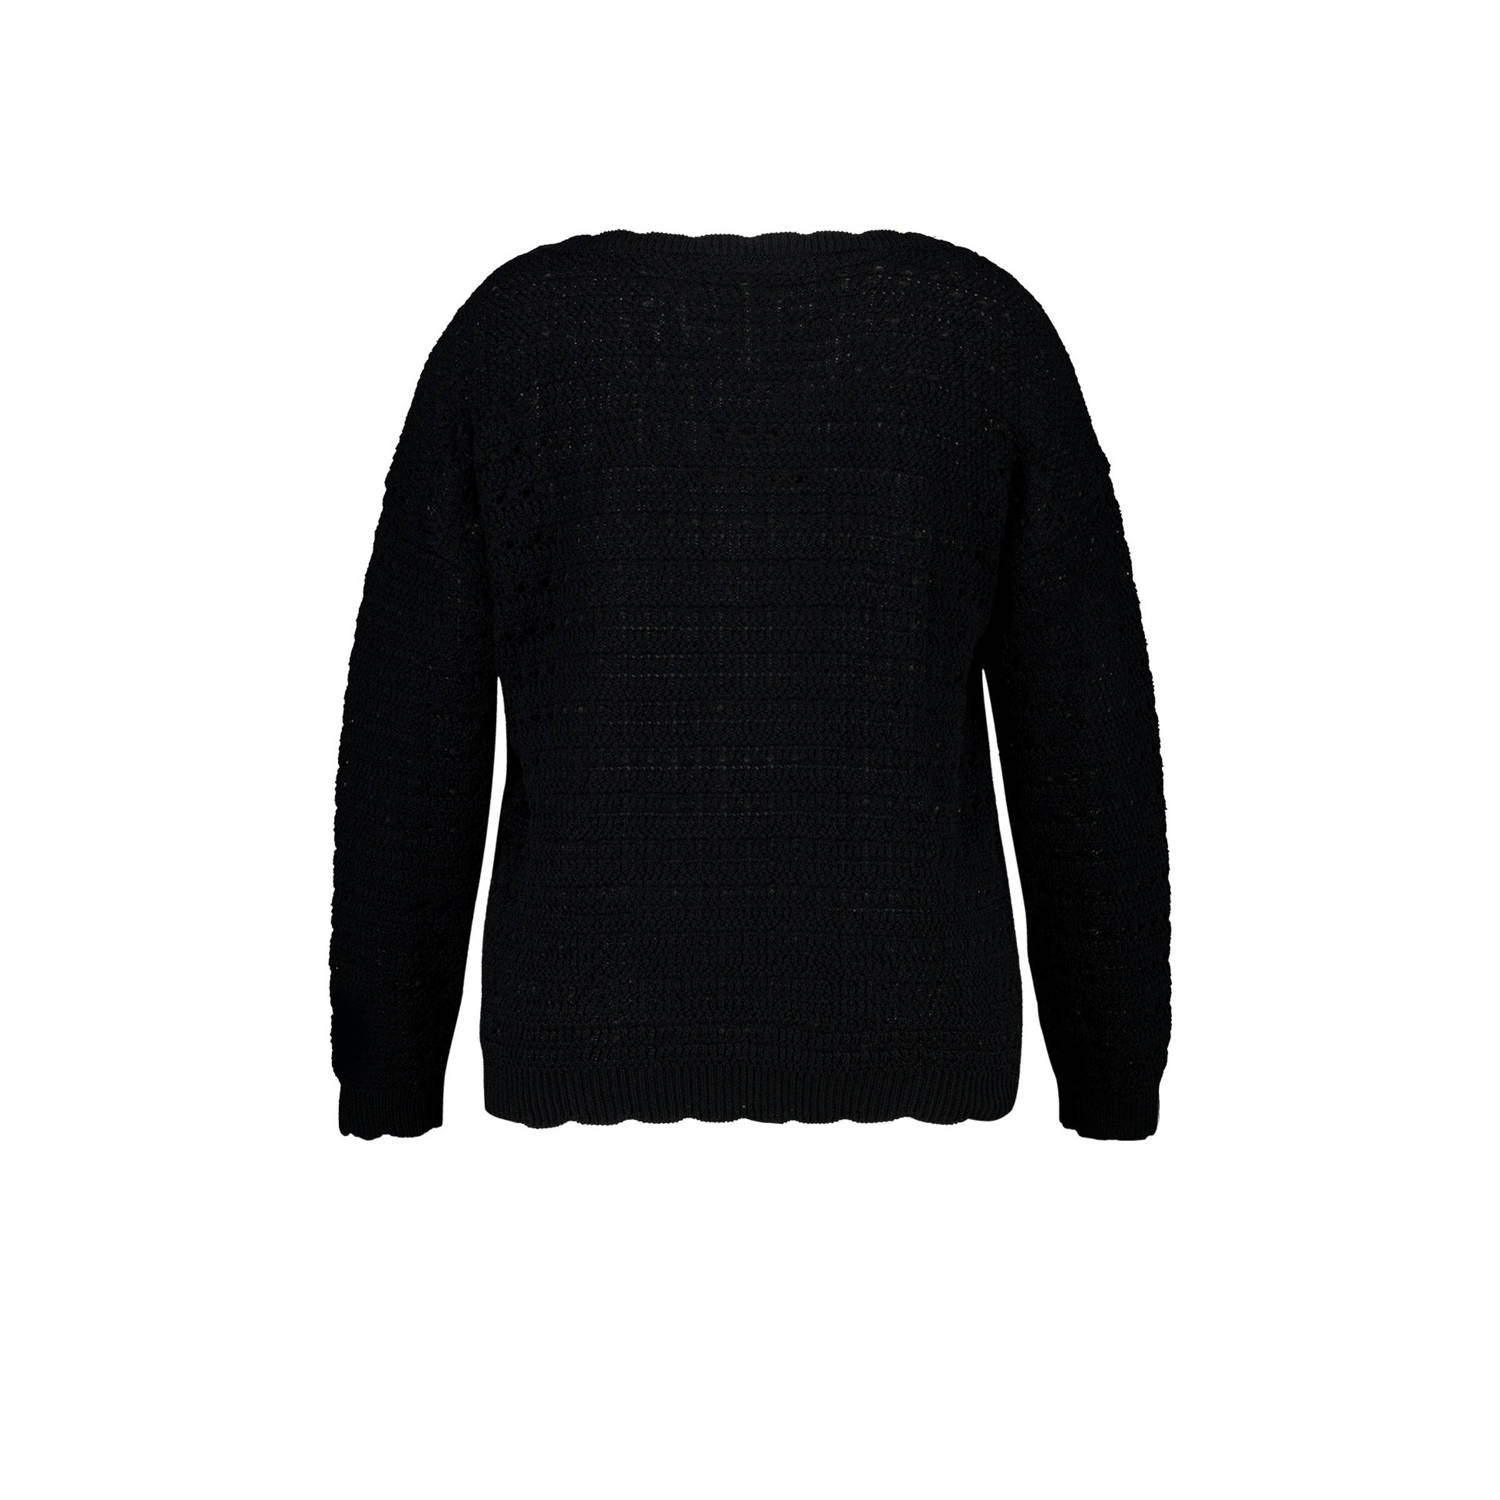 MS Mode grofgebreide trui zwart